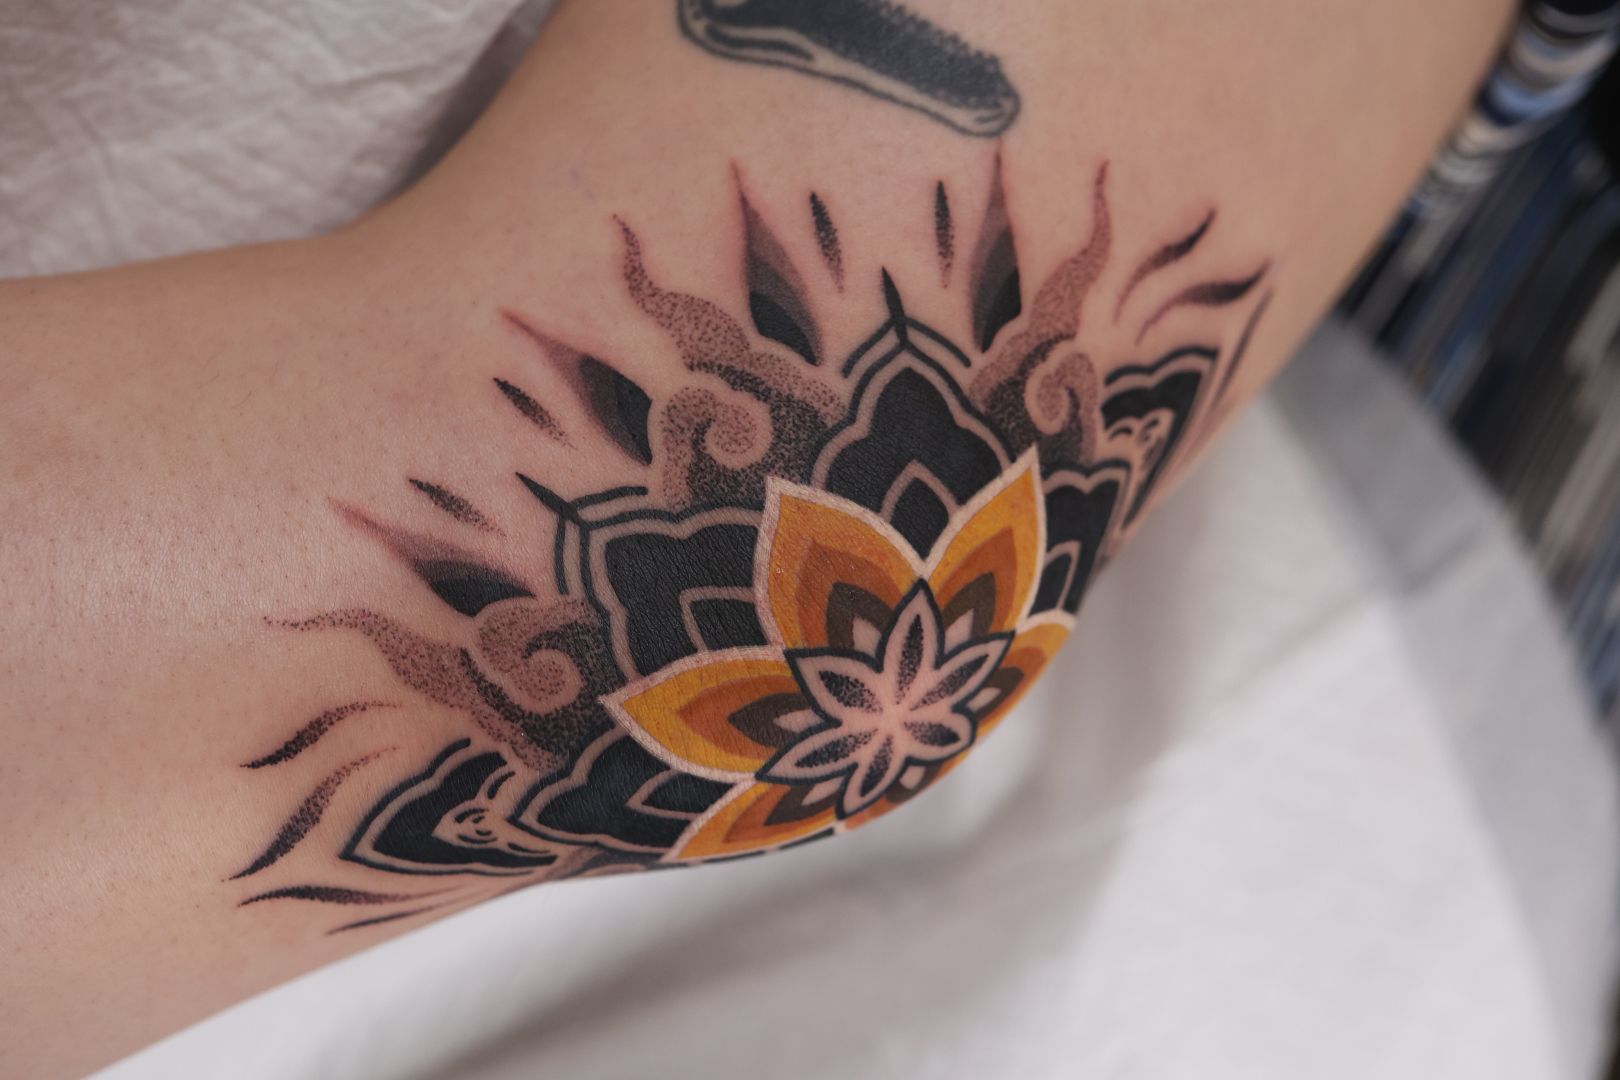 korean national flower tattoo